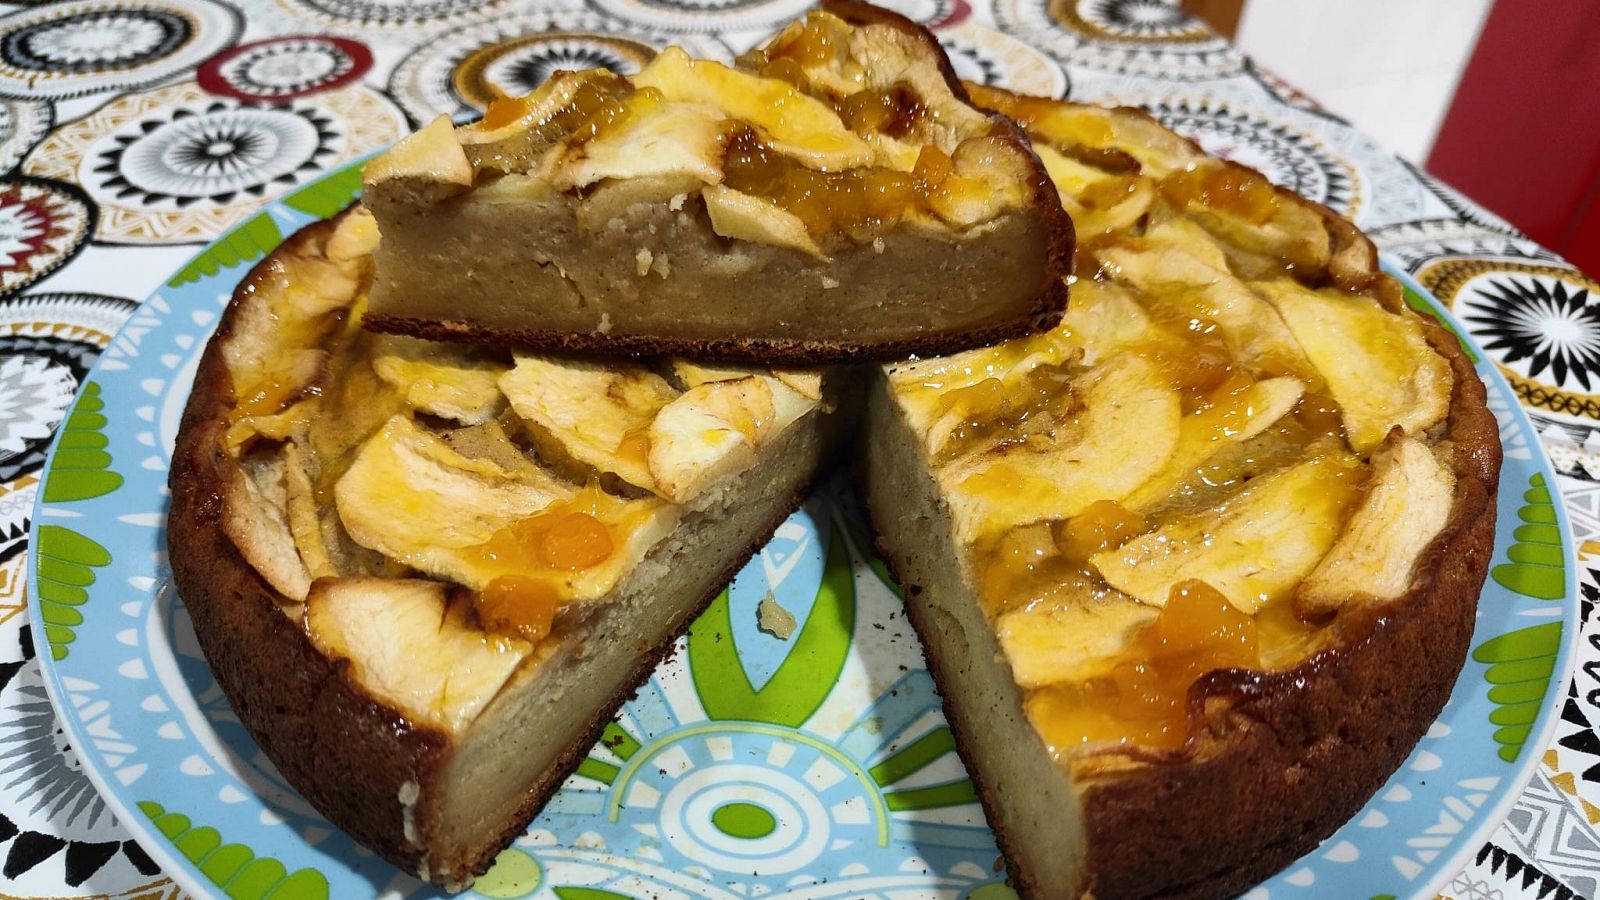 La cocina de Adora: Receta de tarta de manzana casera